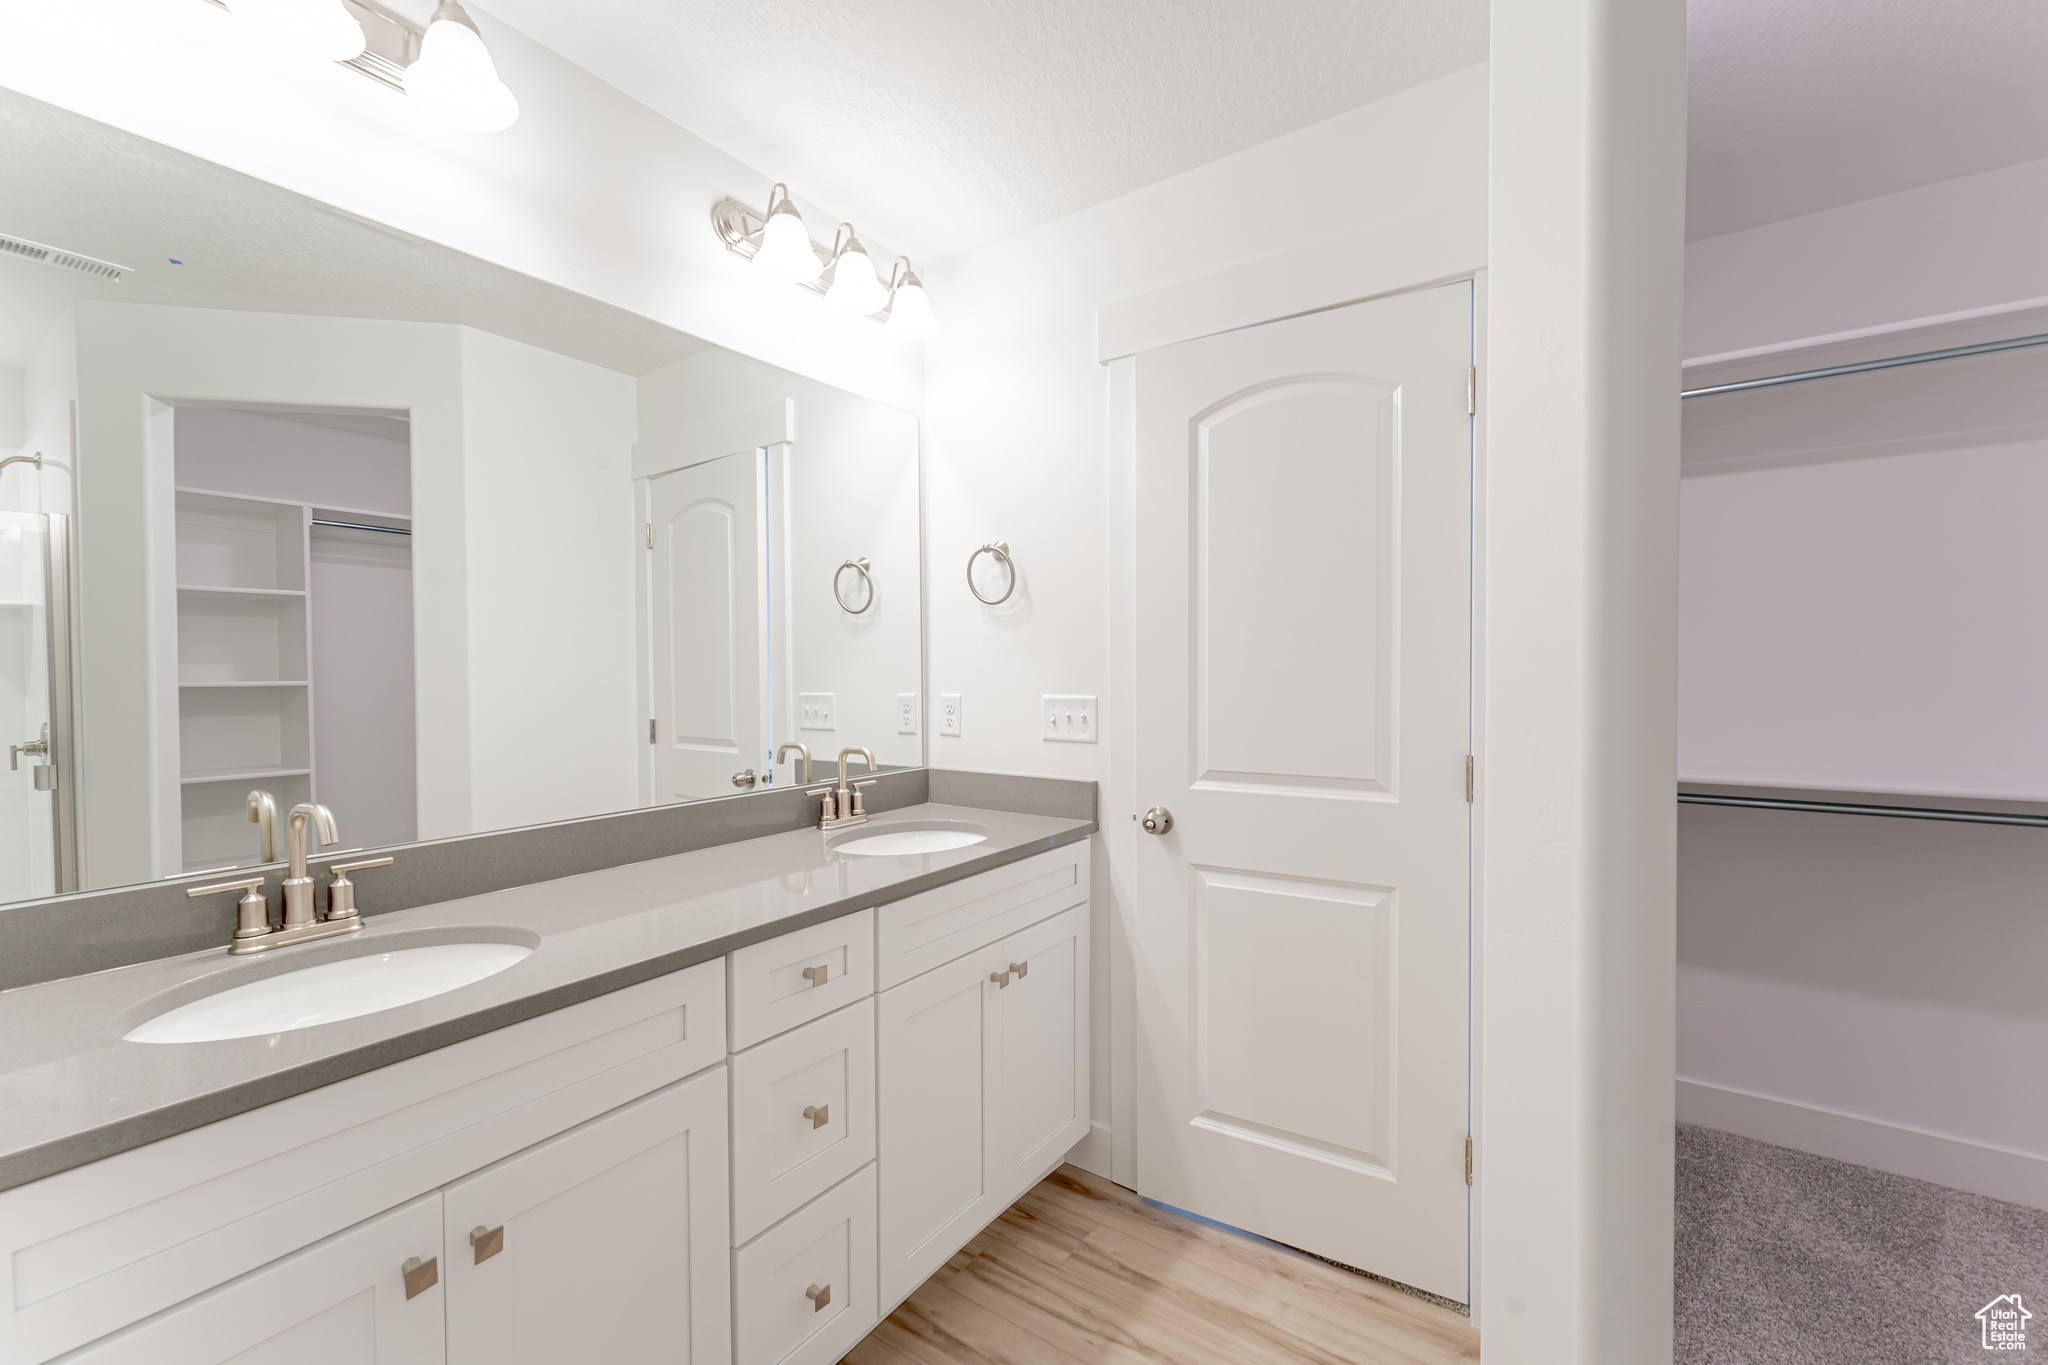 Bathroom featuring hardwood / wood-style floors, large vanity, and double sink